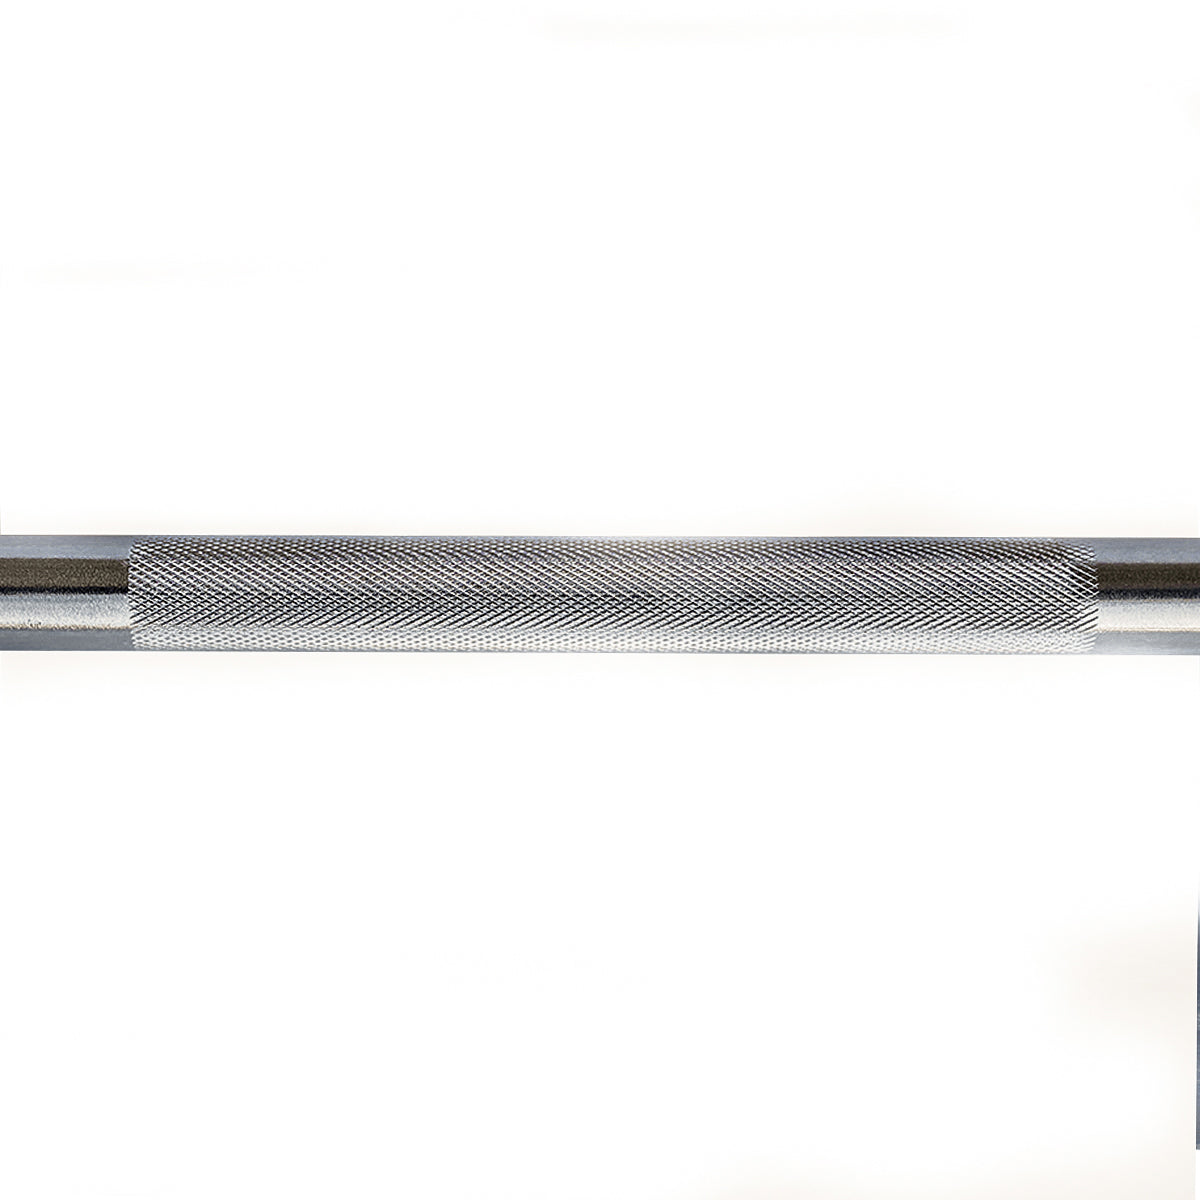 1.2m Standard Steel Straight Barbell knurling